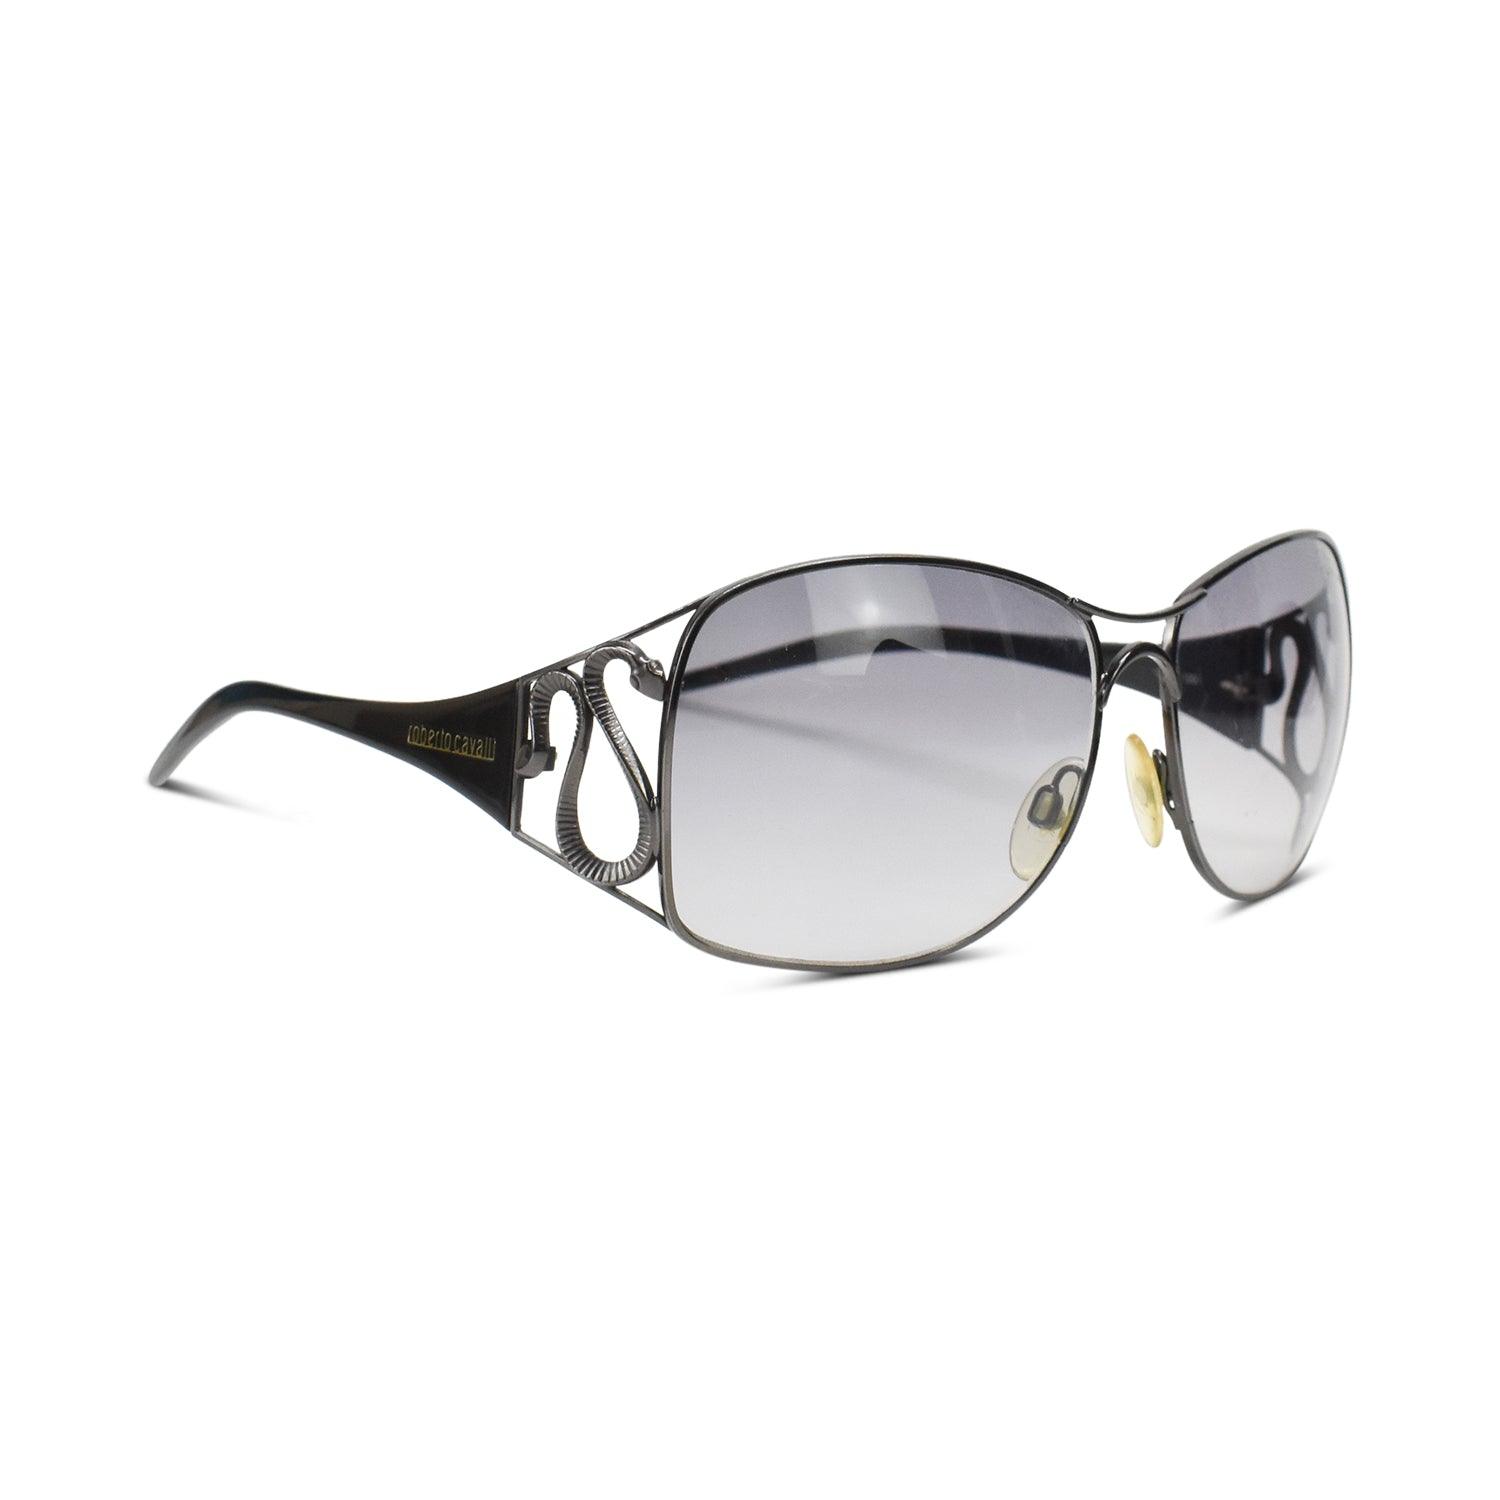 Roberto Cavalli Sunglasses - Fashionably Yours